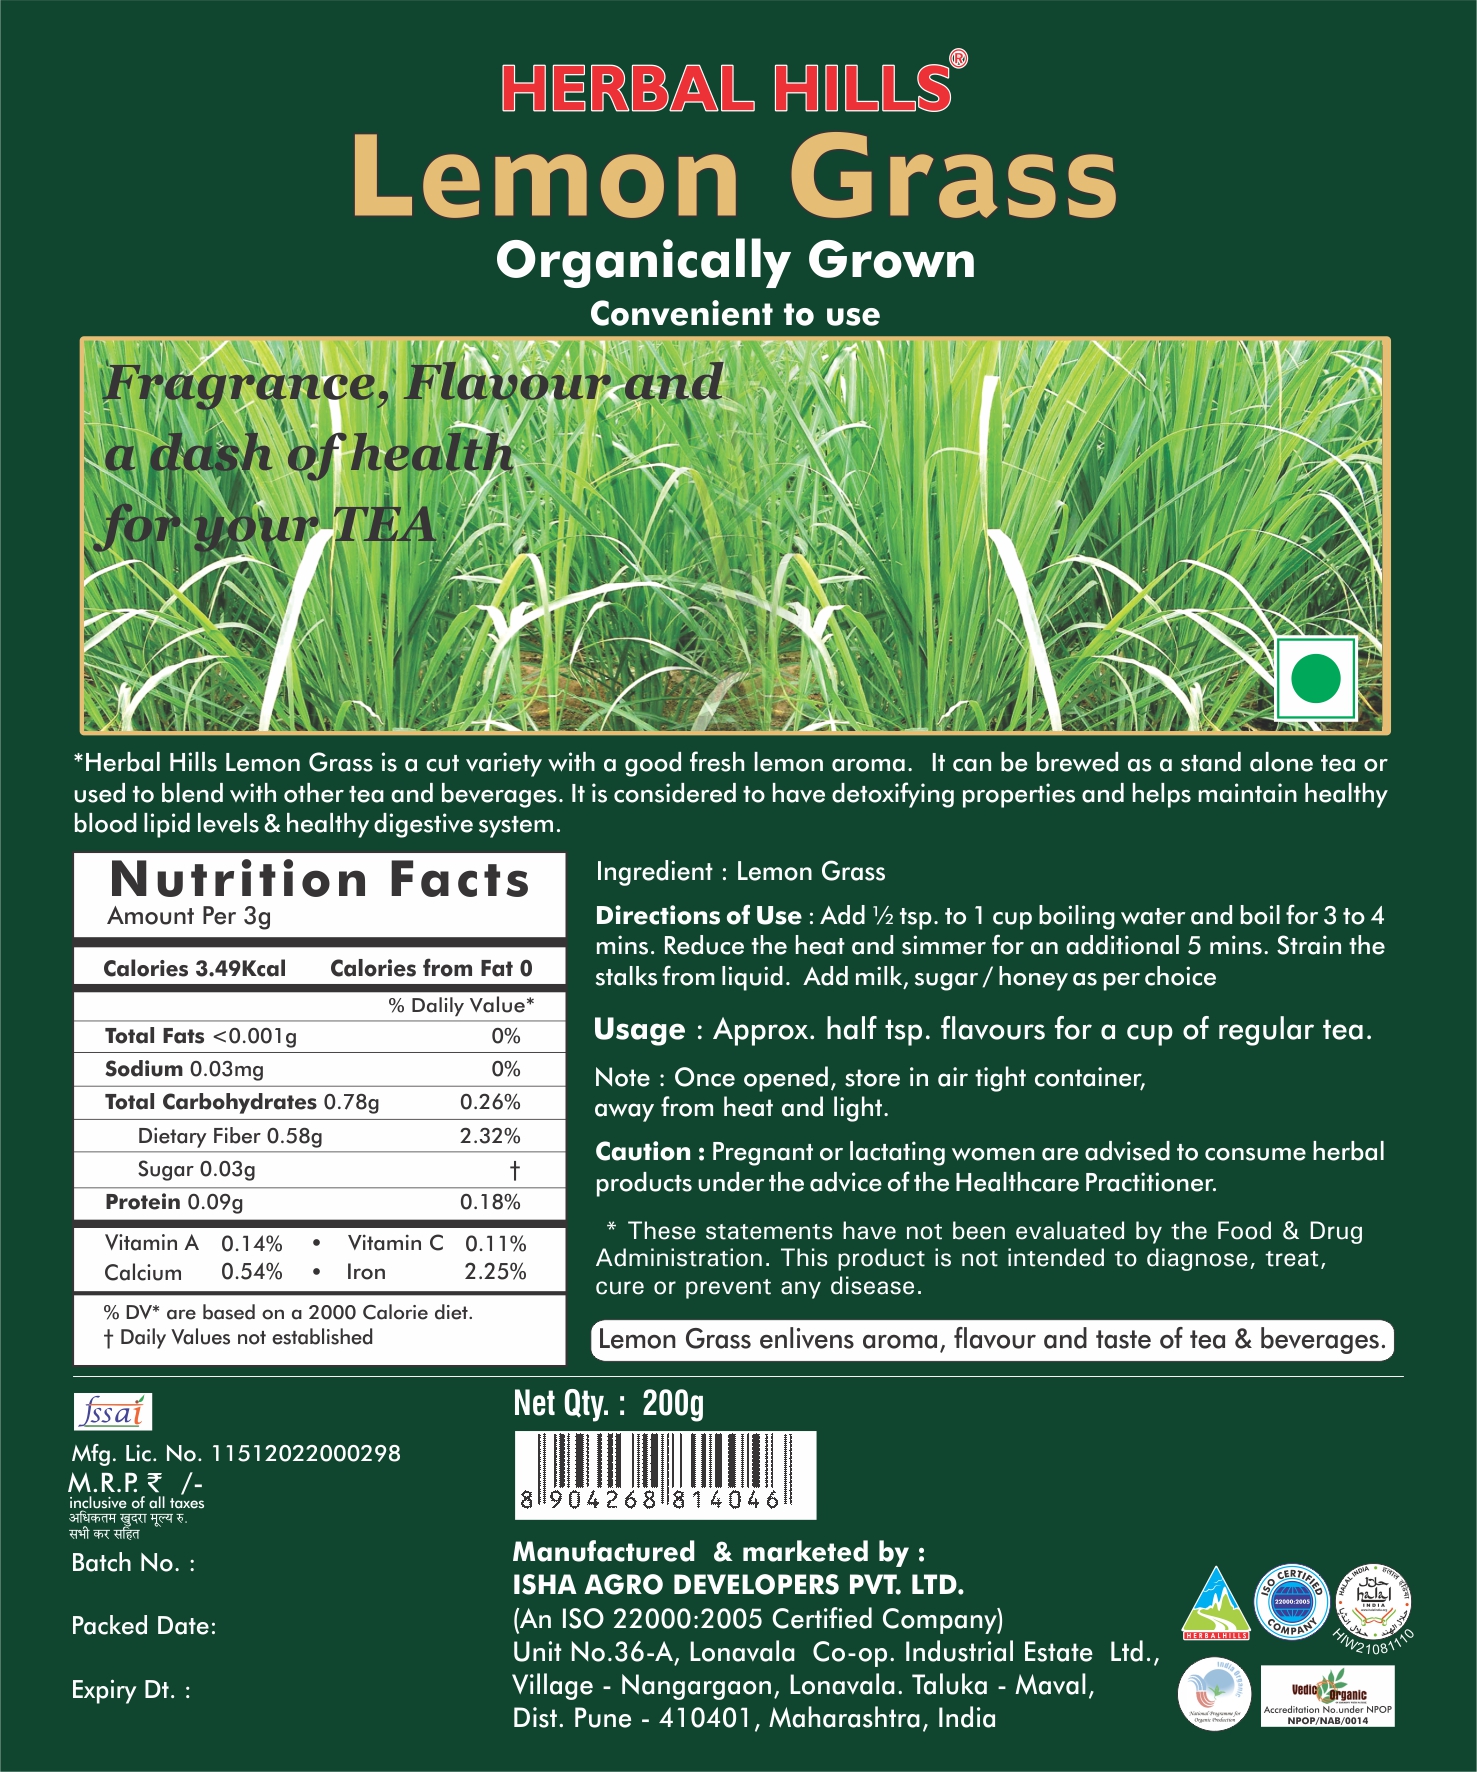 Buy Herbal Hills Lemongrass at Best Price Online